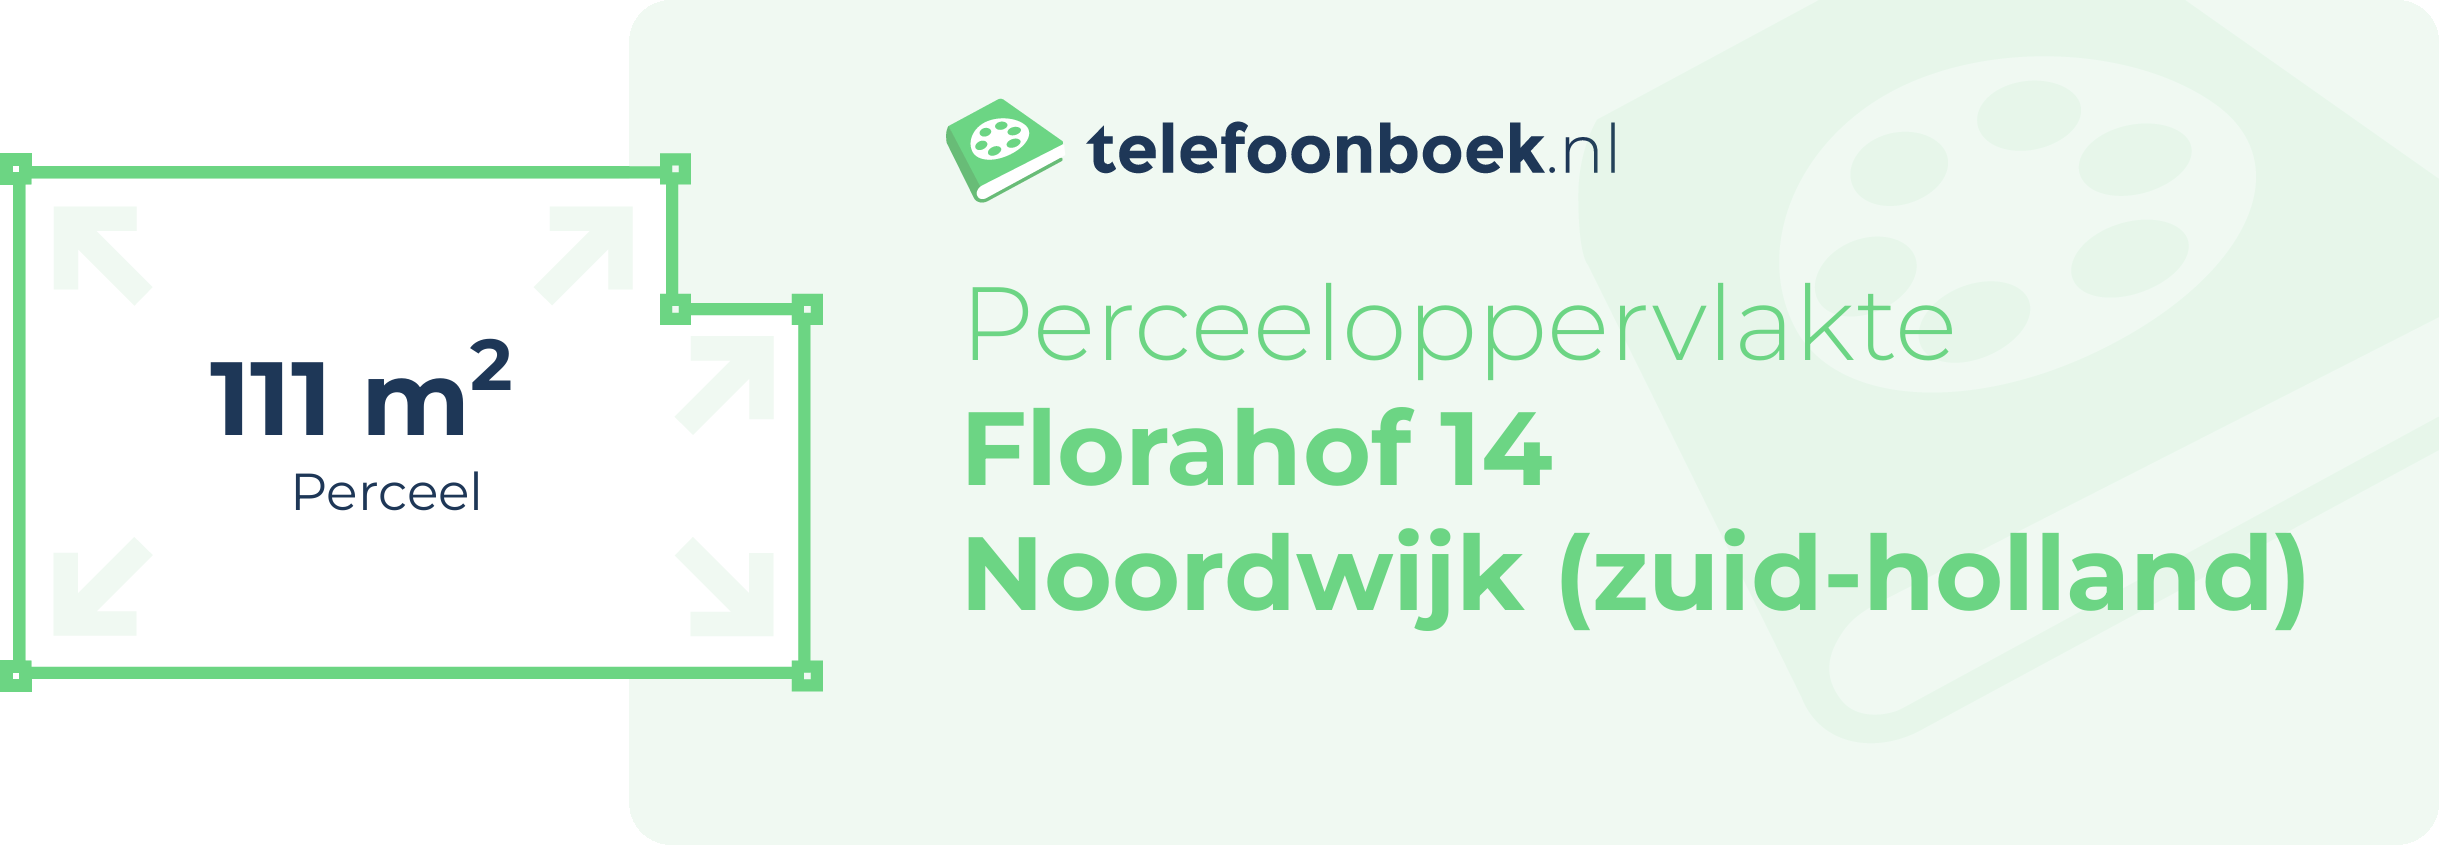 Perceeloppervlakte Florahof 14 Noordwijk (Zuid-Holland)